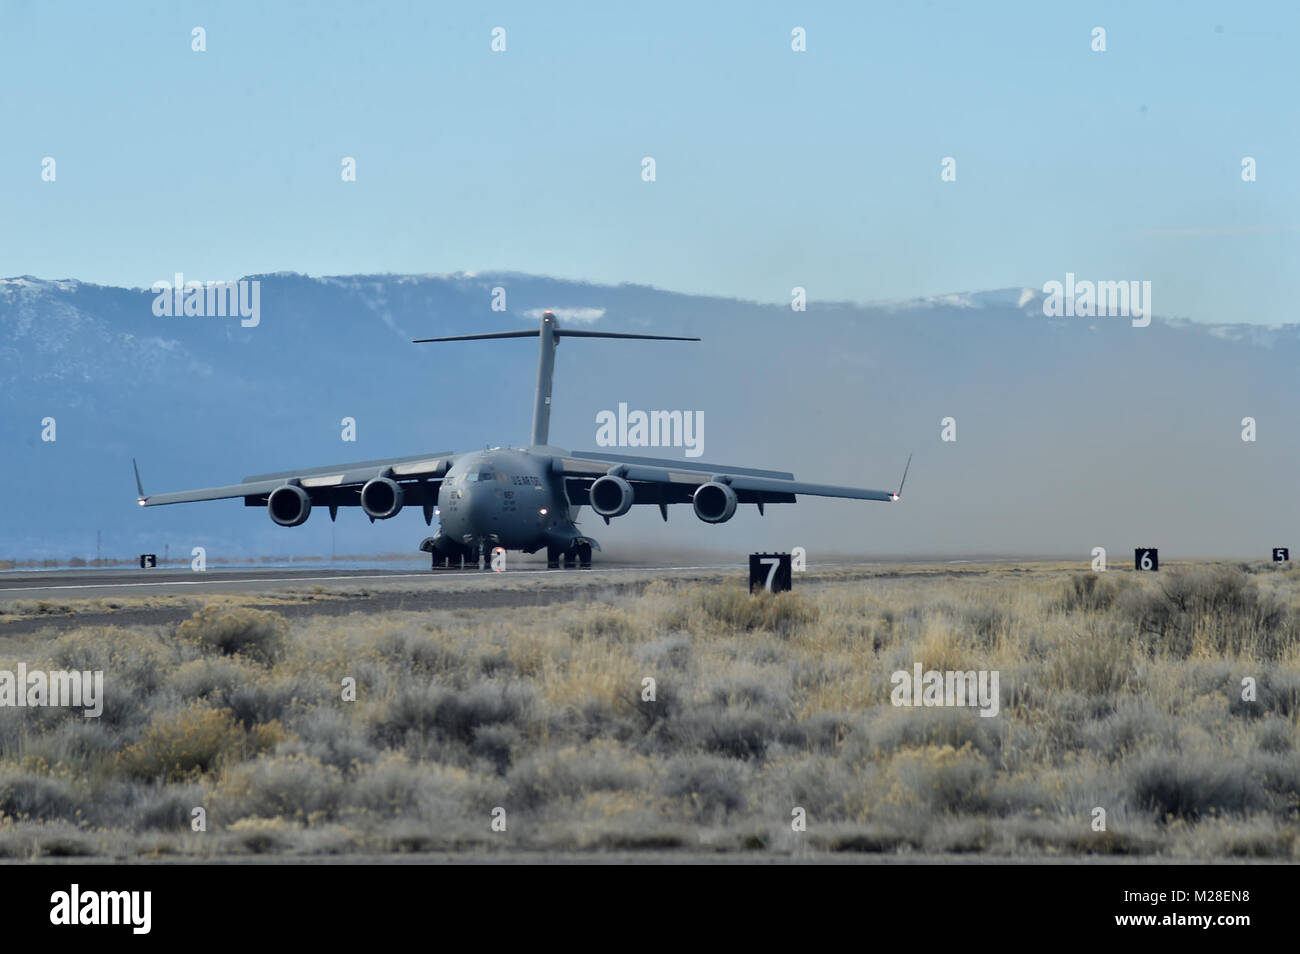 A C17 Globemaster aircraft from Travis Air Force Base, Calif., lands